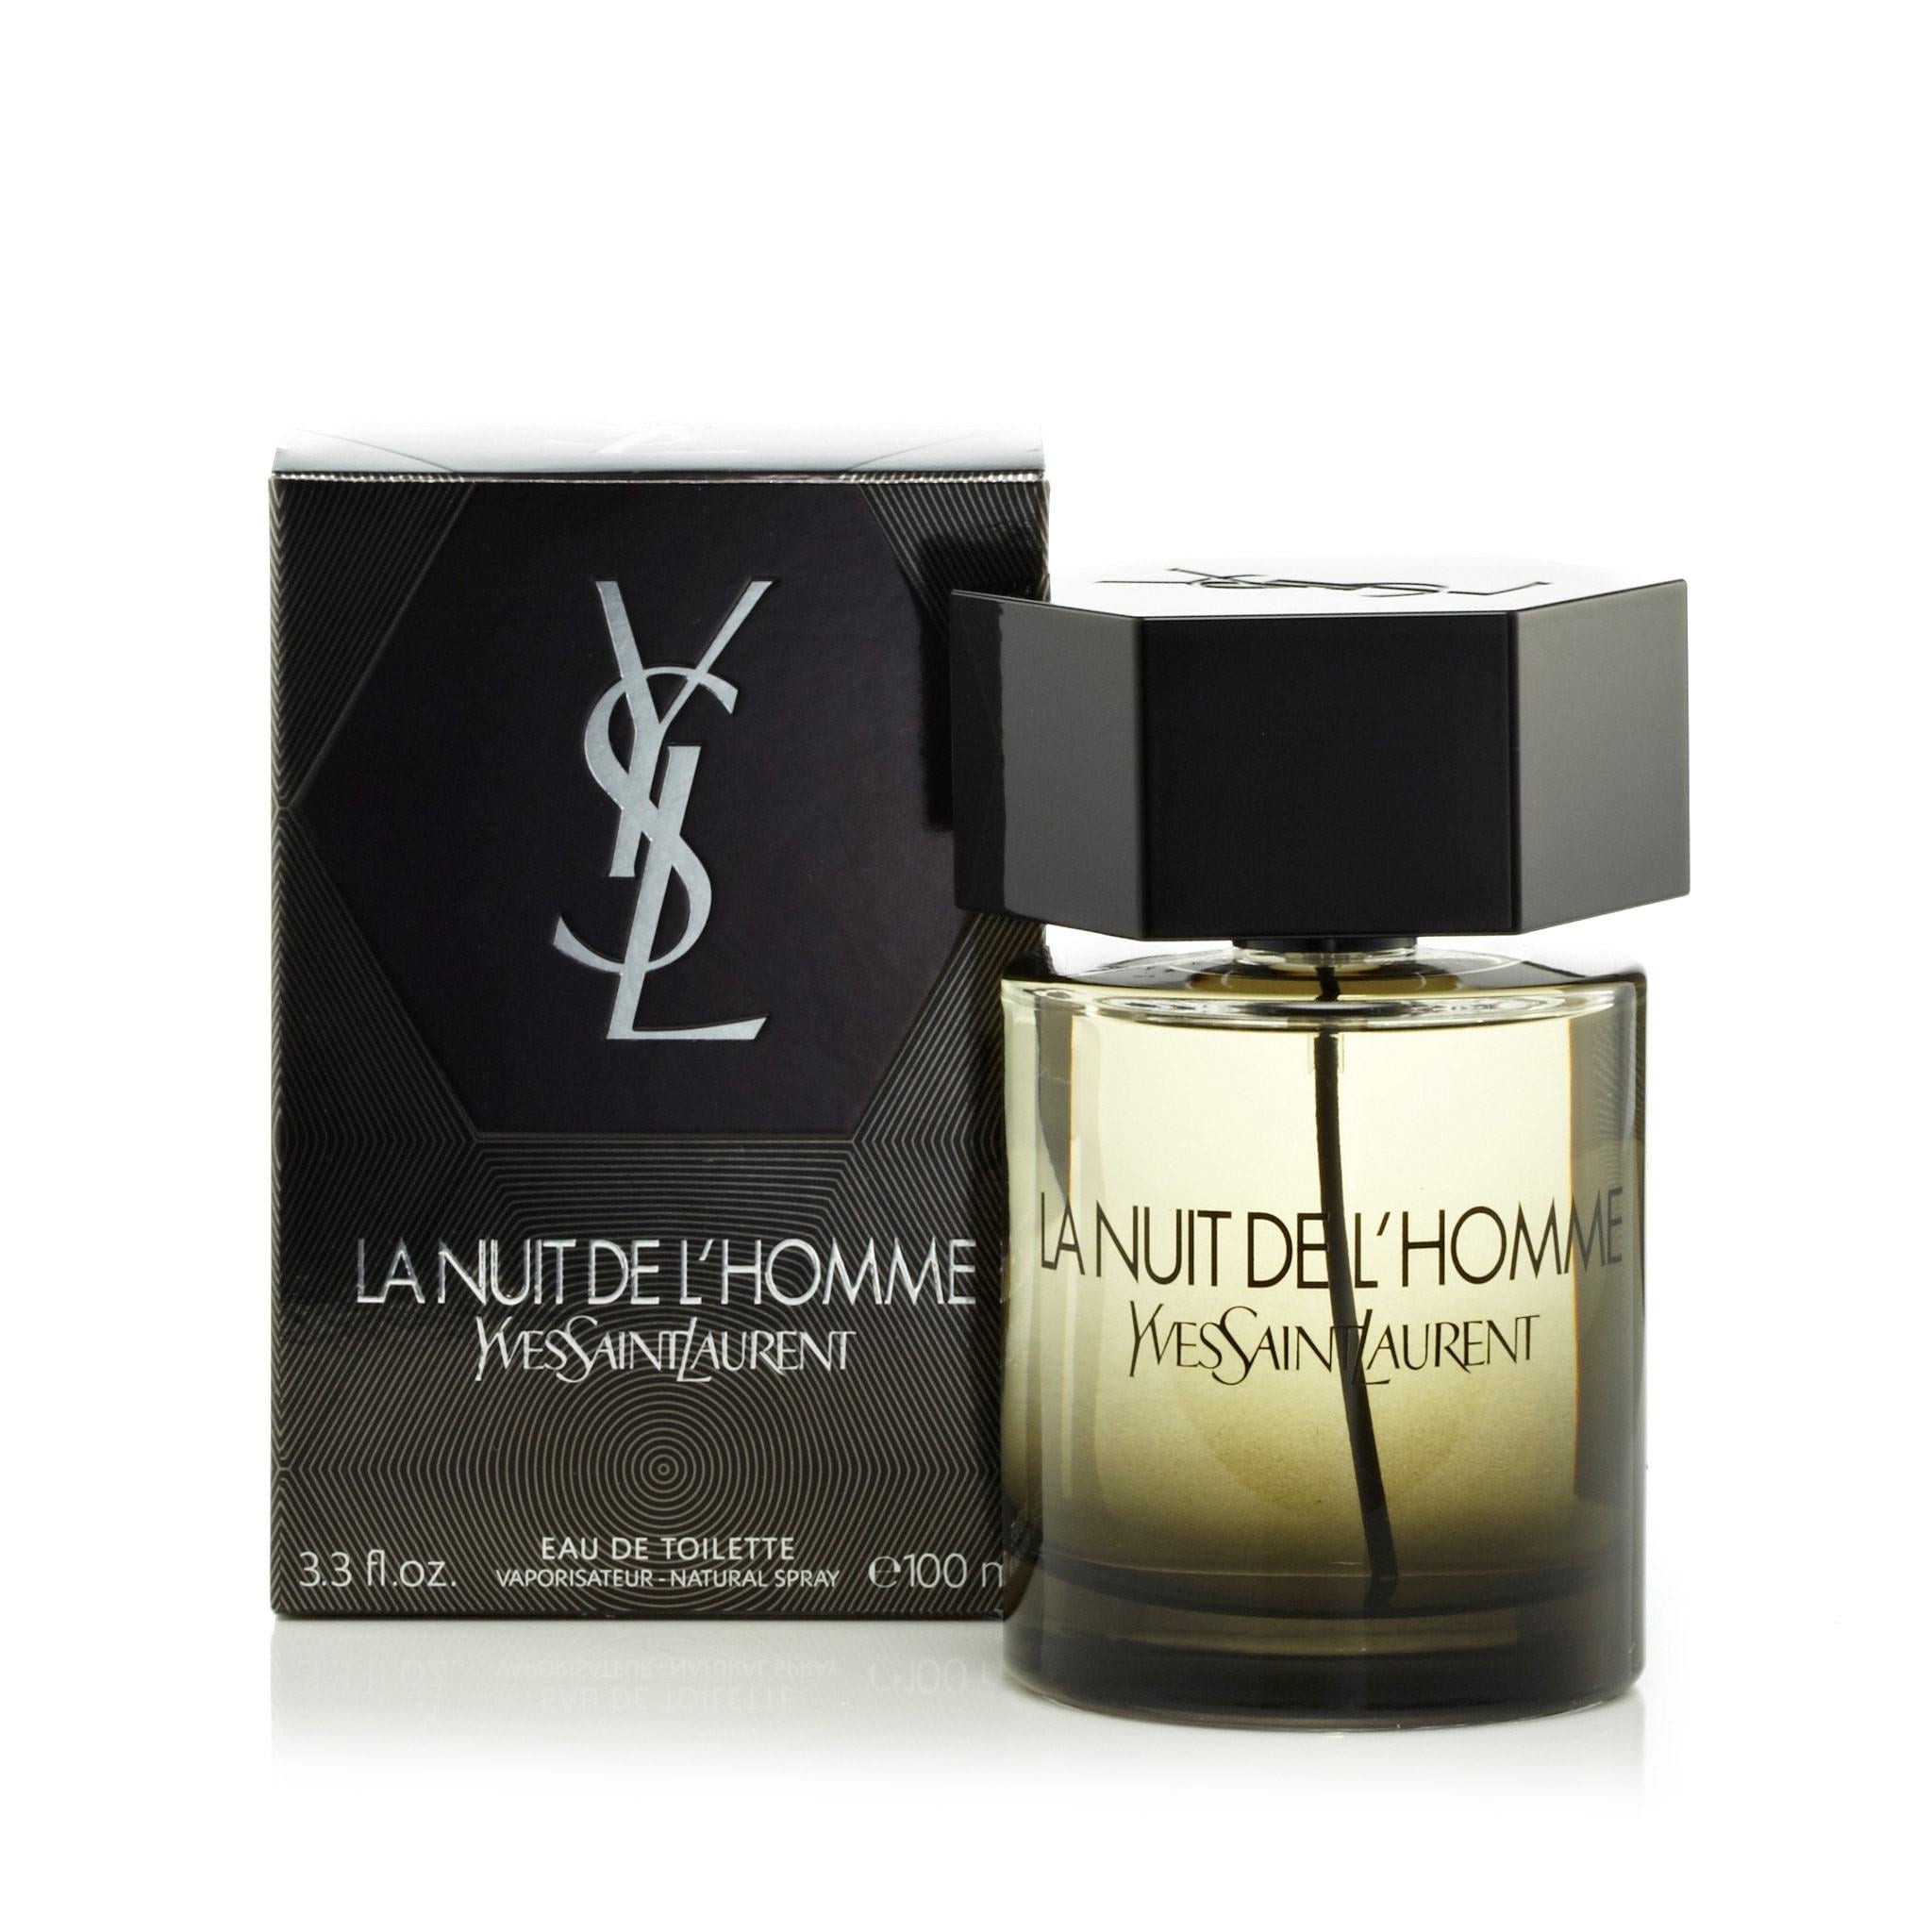 Nuit perfume 100 ml perfume spray Eau de parfum for men and women